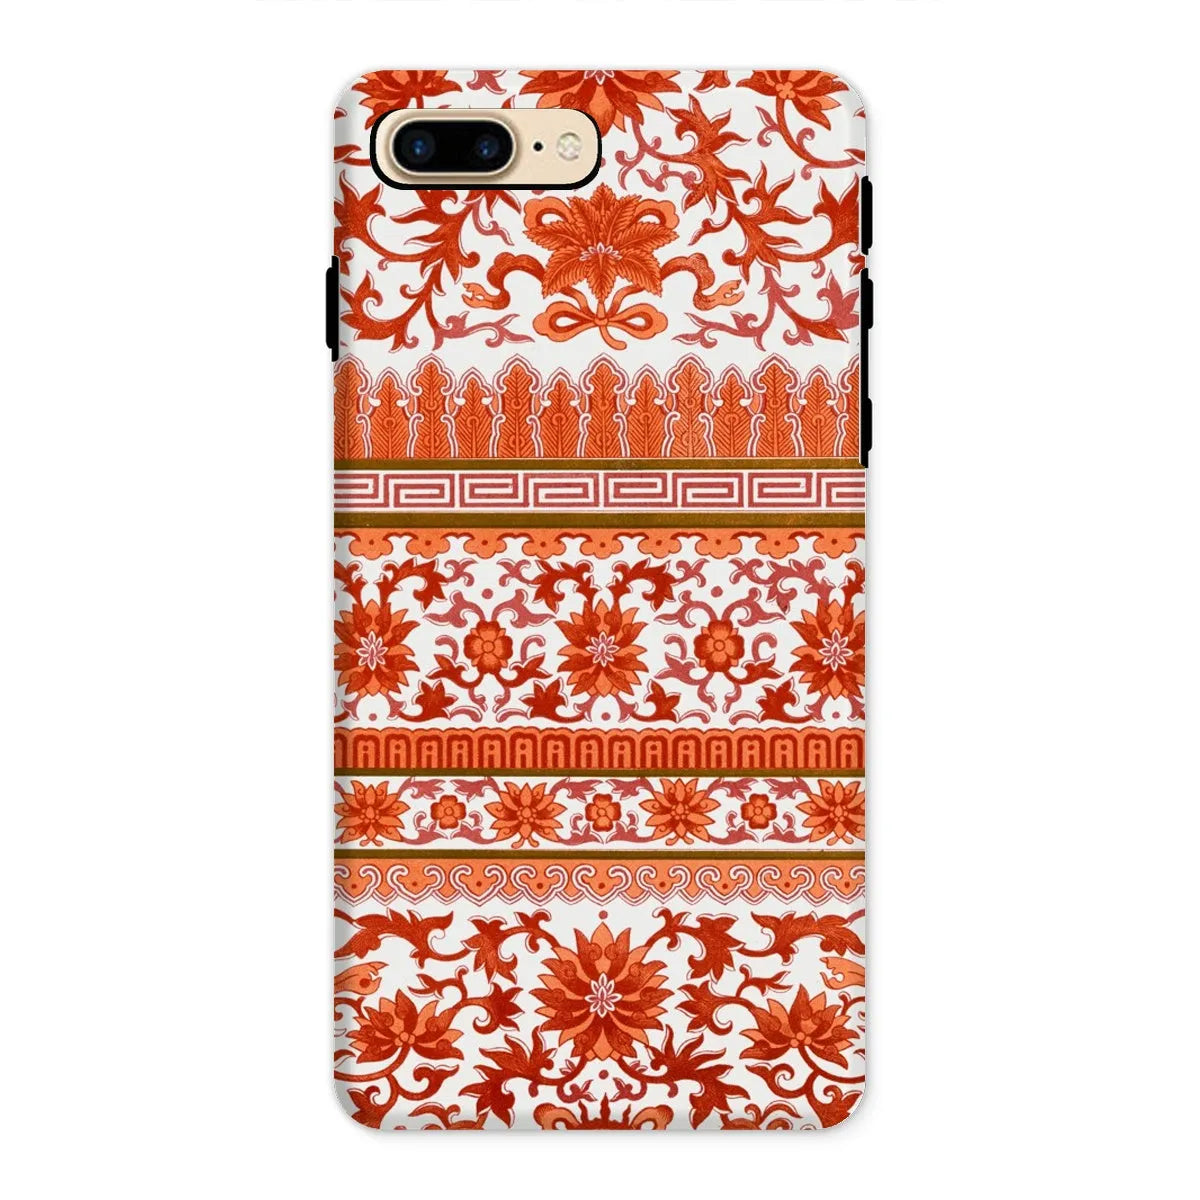 Fiery Chinese Floral Aesthetic Art Phone Case - Owen Jones - Iphone 8 Plus / Matte - Mobile Phone Cases - Aesthetic Art